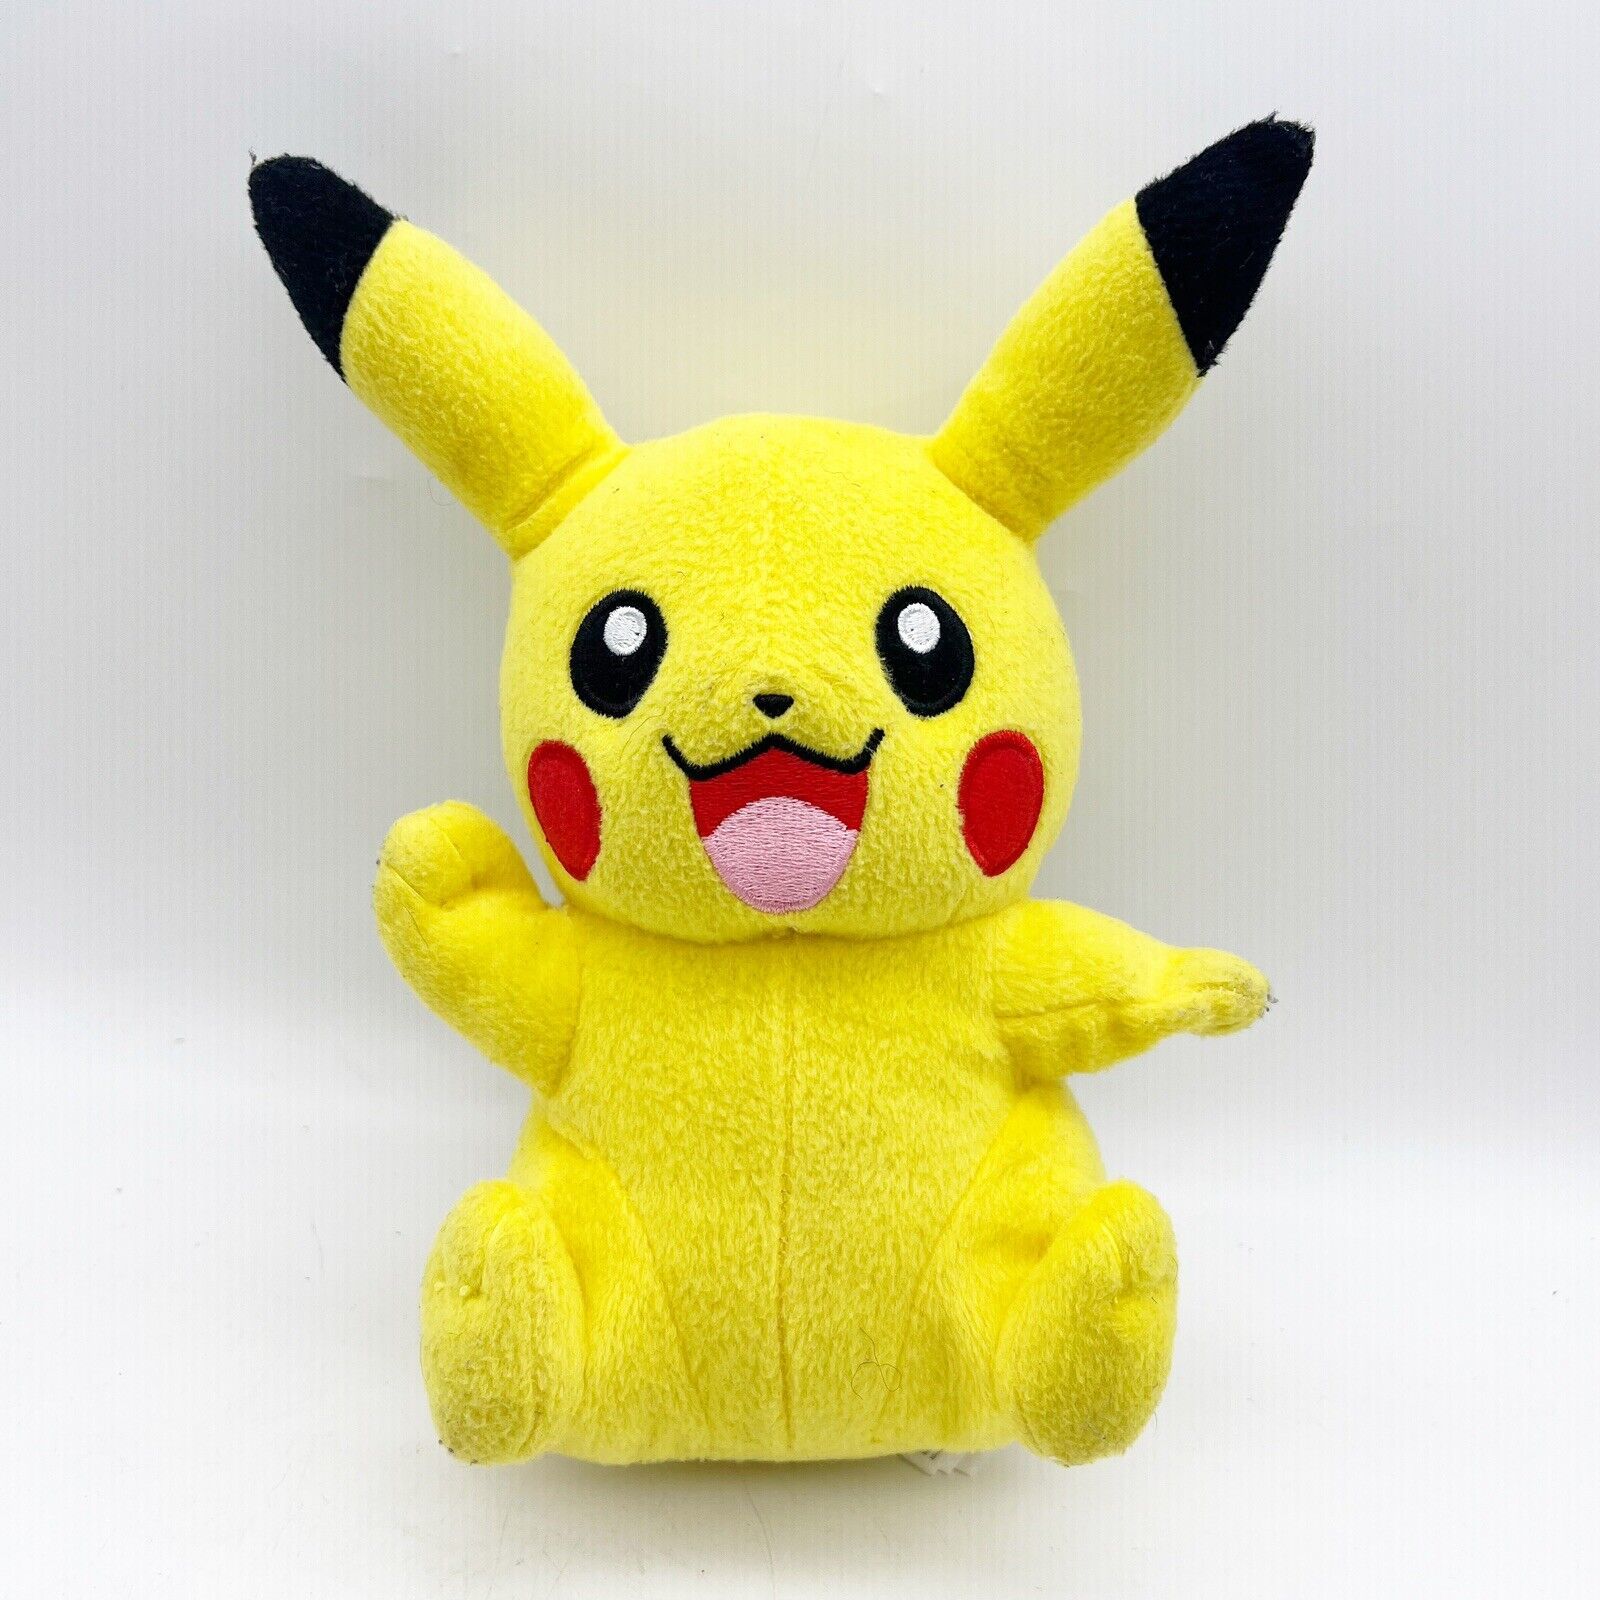 2017 Tomy Pikachu Pokemon Plush Toy Stuffed Doll 8" - $12.99